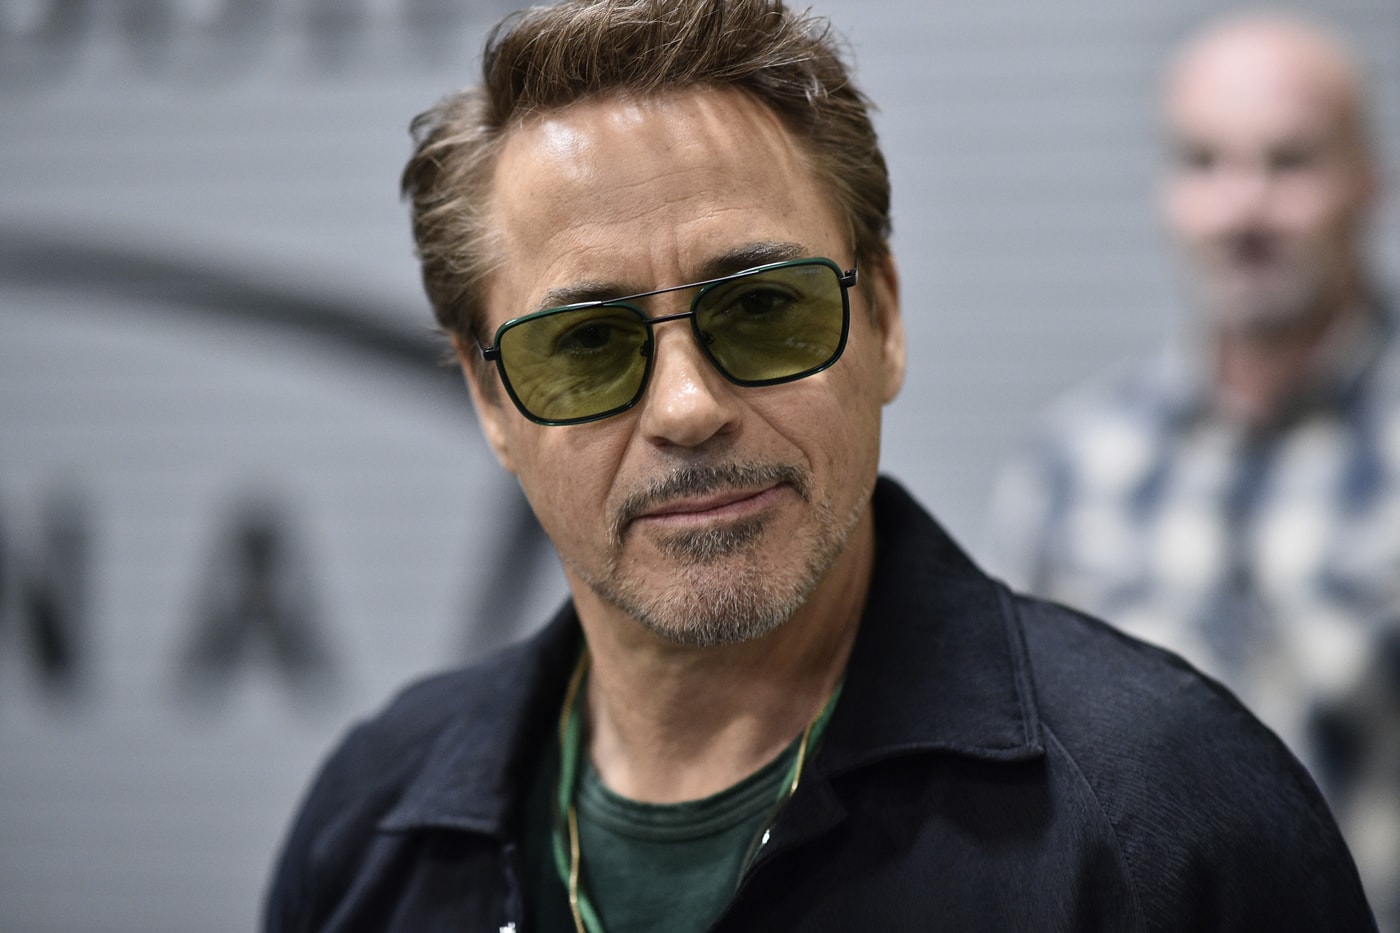 Robert Downey Jr. 談論過去 25 年來拍攝過的「最重要電影」